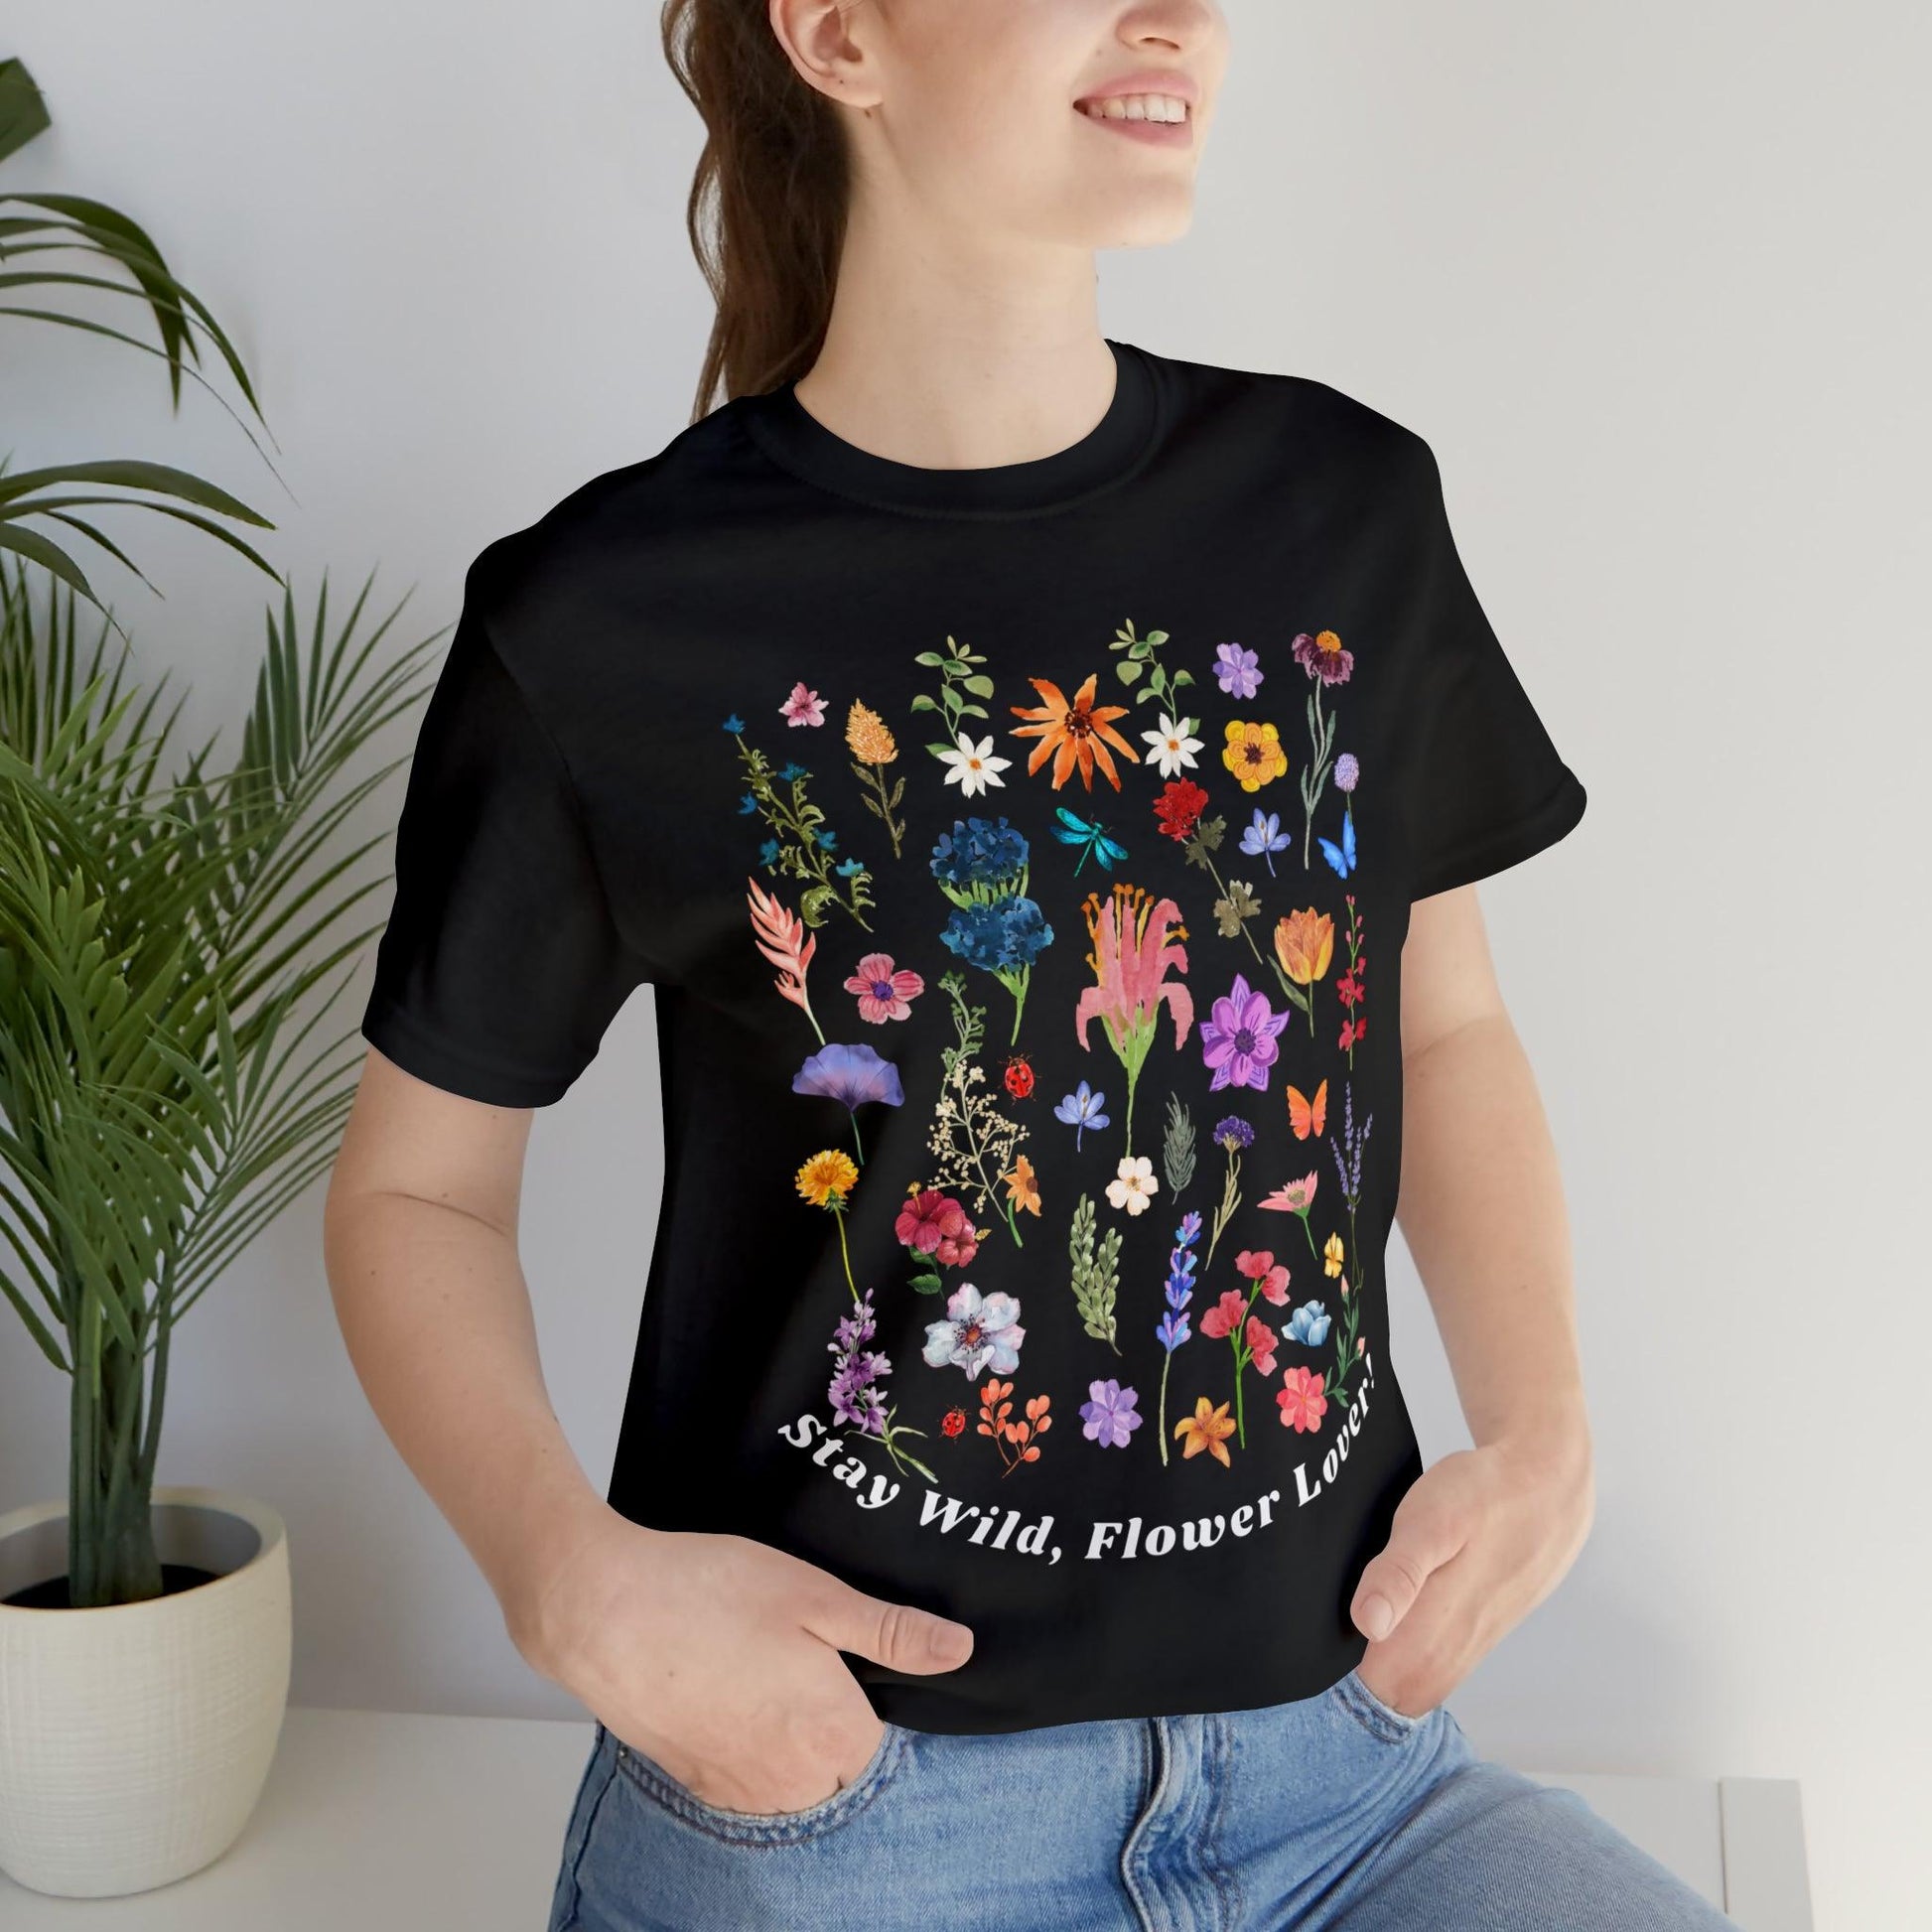 Wildflower Tshirt Flowers Shirt Floral Tshirt Flower Shirt Gift for Women - Ladies Shirts Best Friend Gift, Plant Mom Stay Wild flower lover - Giftsmojo